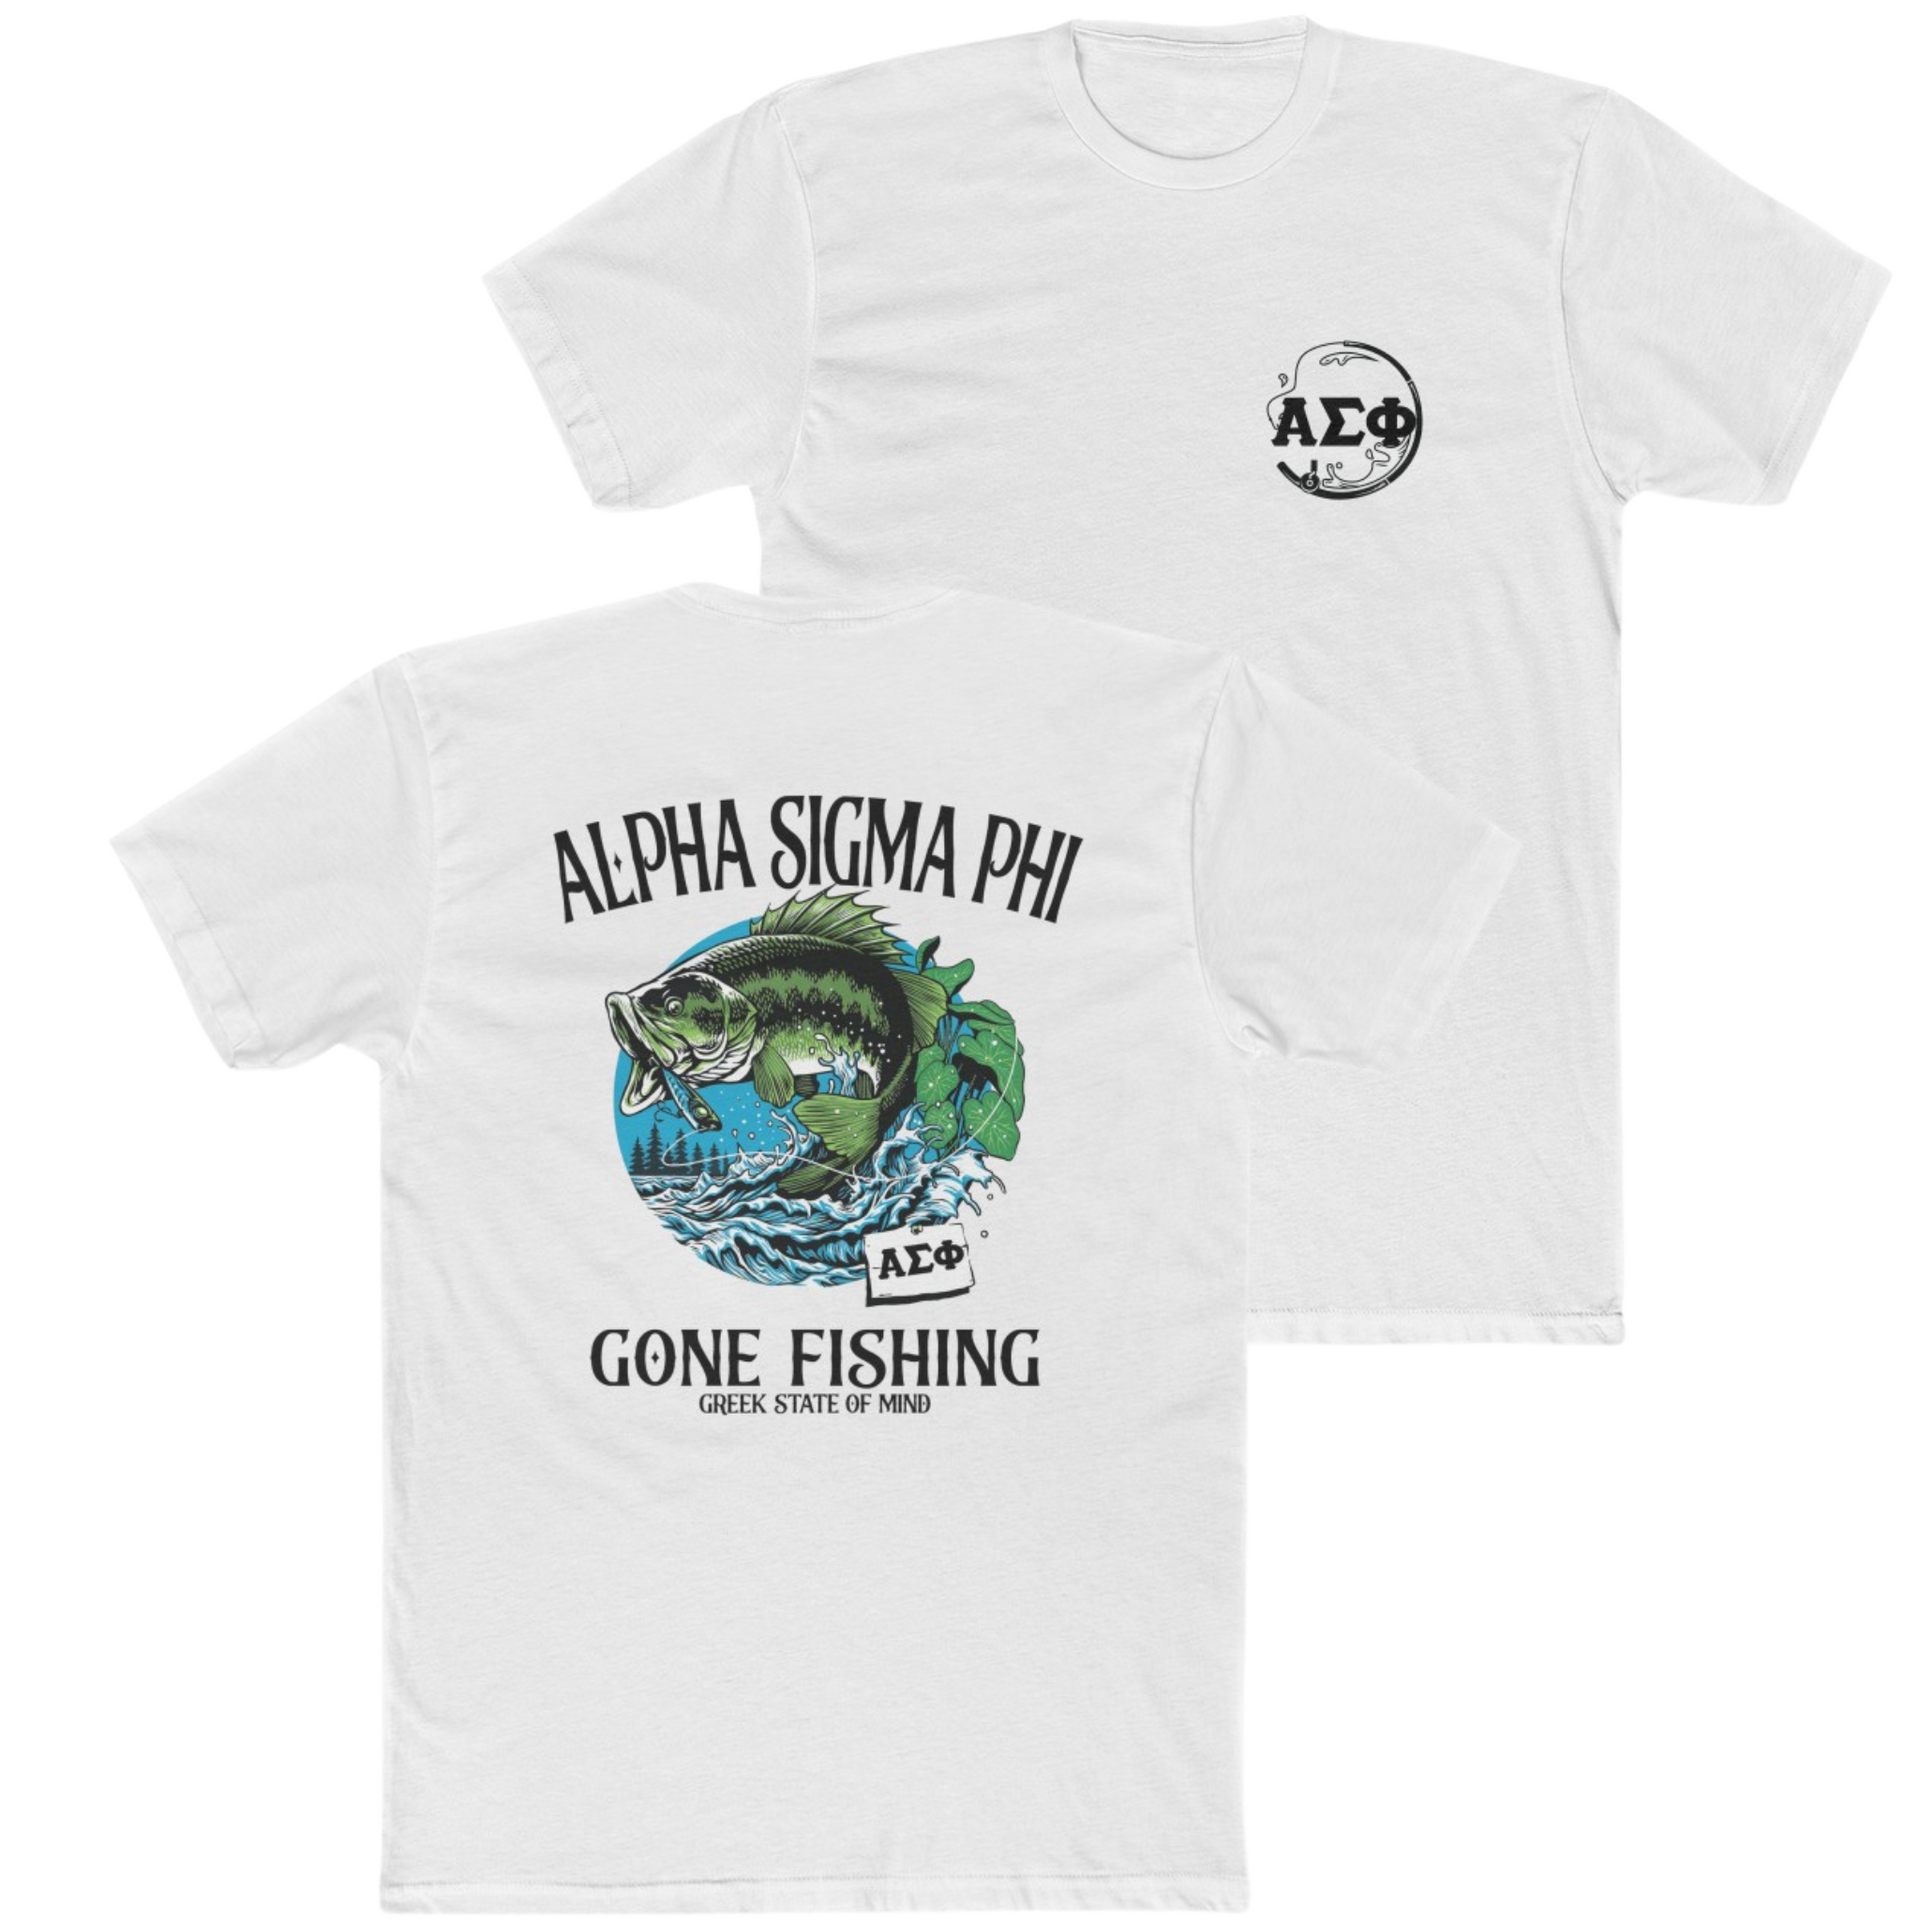 White Alpha Sigma Phi Graphic T-Shirt | Gone Fishing | Alpha Sigma Phi Fraternity Shirt